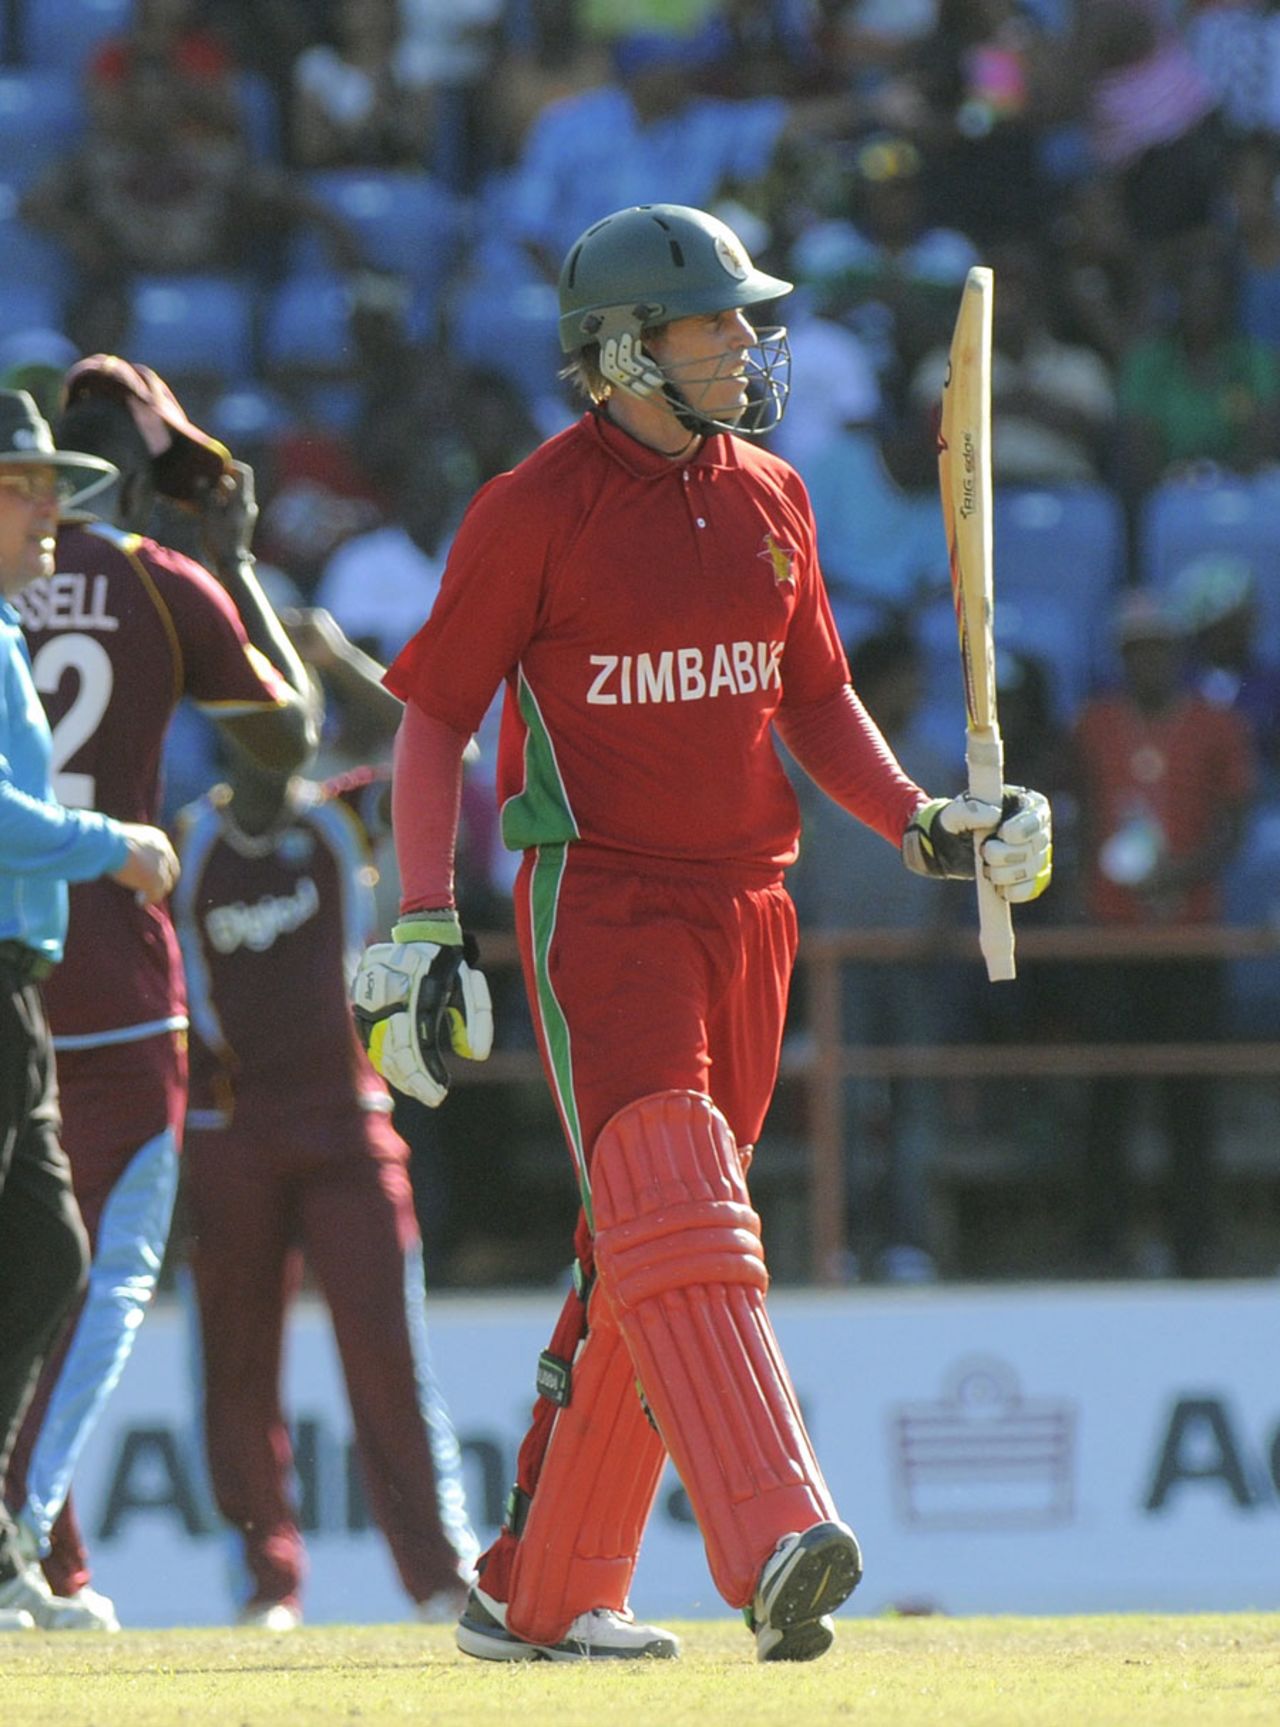 Malcolm Waller top-scored with 51 for Zimbabwe, West Indies v Zimbabwe, 1st ODI, Grenada, February 22, 2013